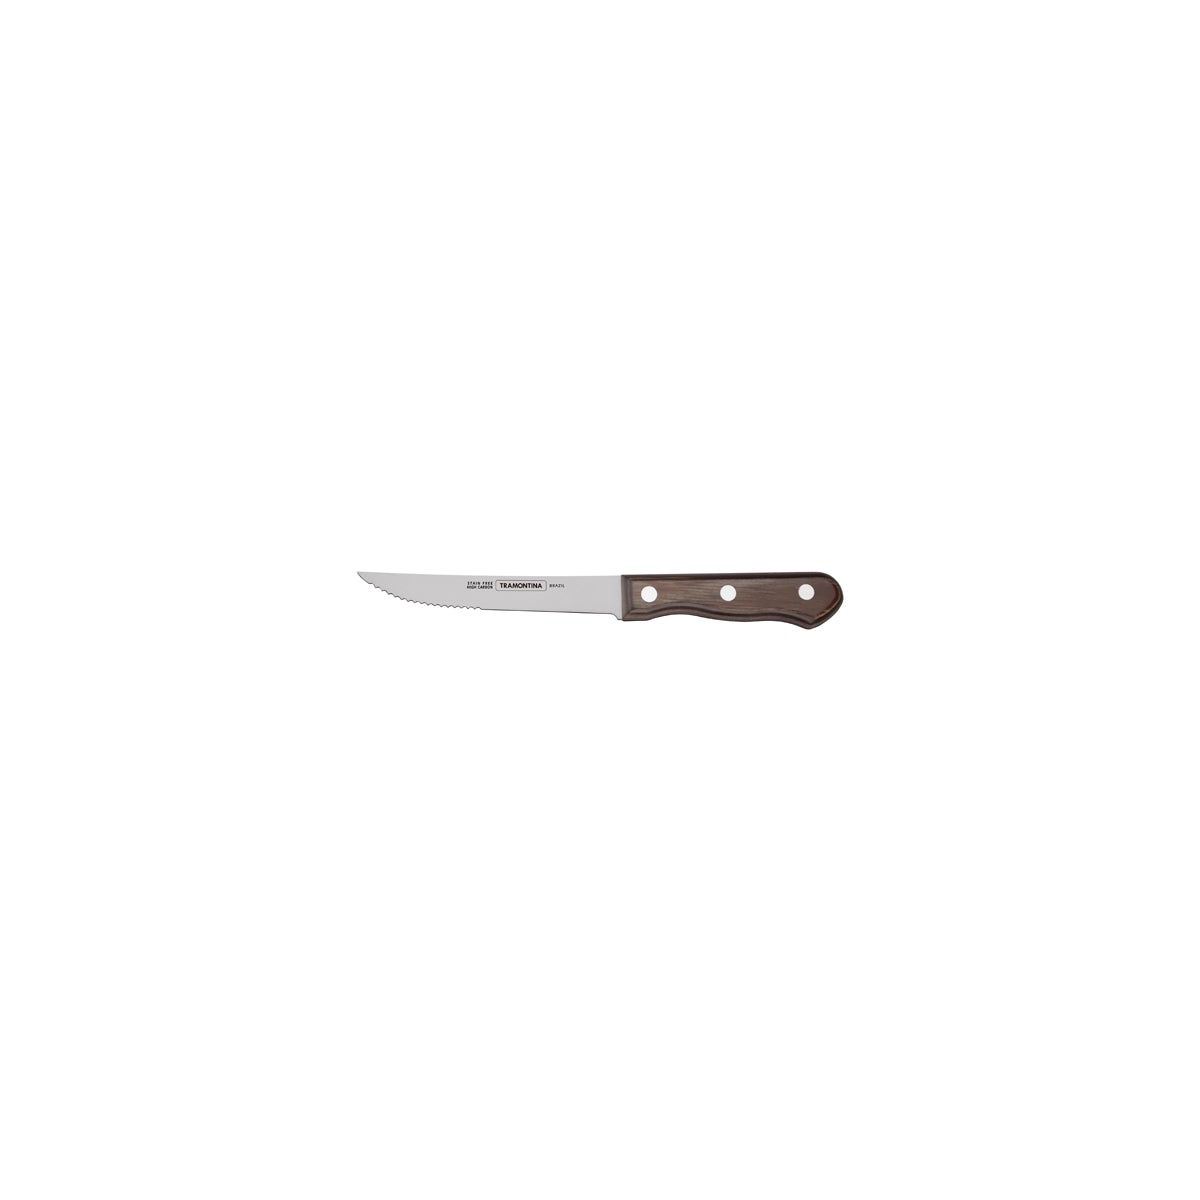 TM21411/095 Tramontina Churrasco Steak Knife Jumbo Serrated Narrow Blade with Polywood Handle Brown 127mm Tomkin Australia Hospitality Supplies